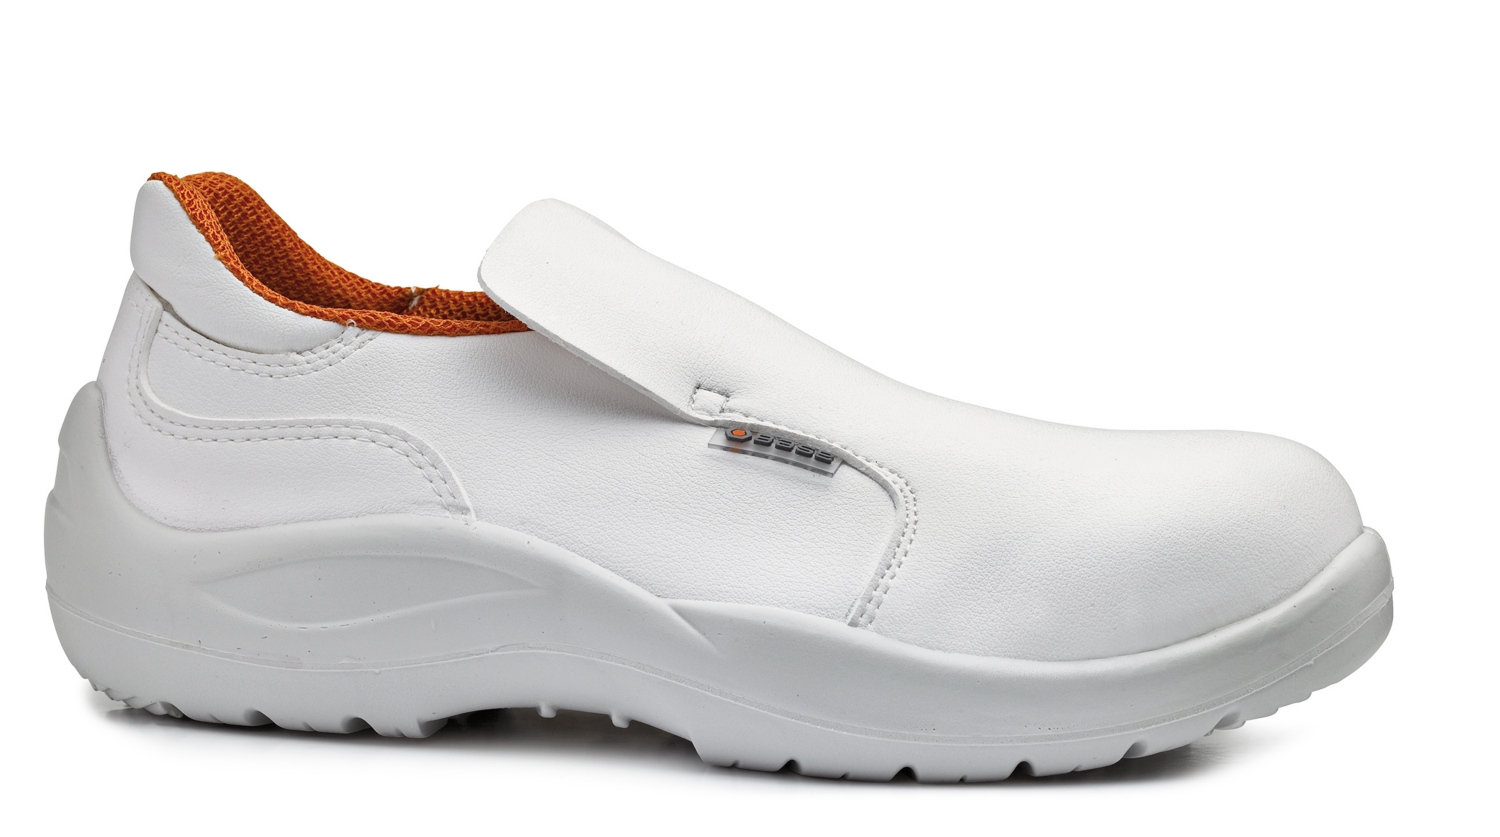  Chaussures basses Cloro B0507 - Blanc 